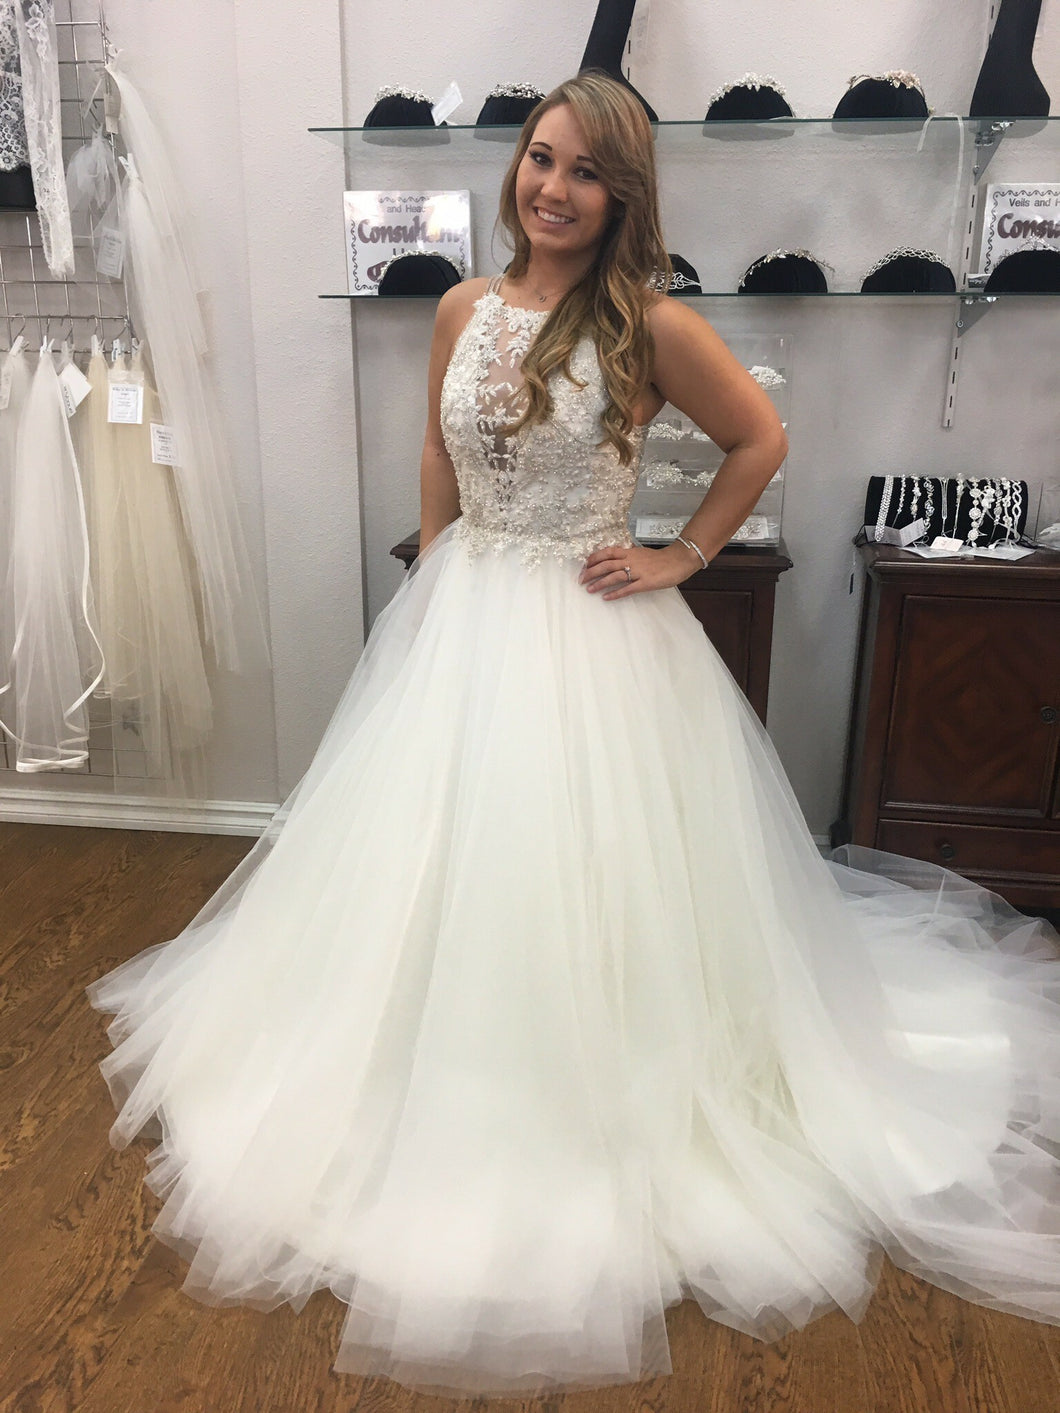 Maggie Sottero 'Lisette' wedding dress size-10 NEW